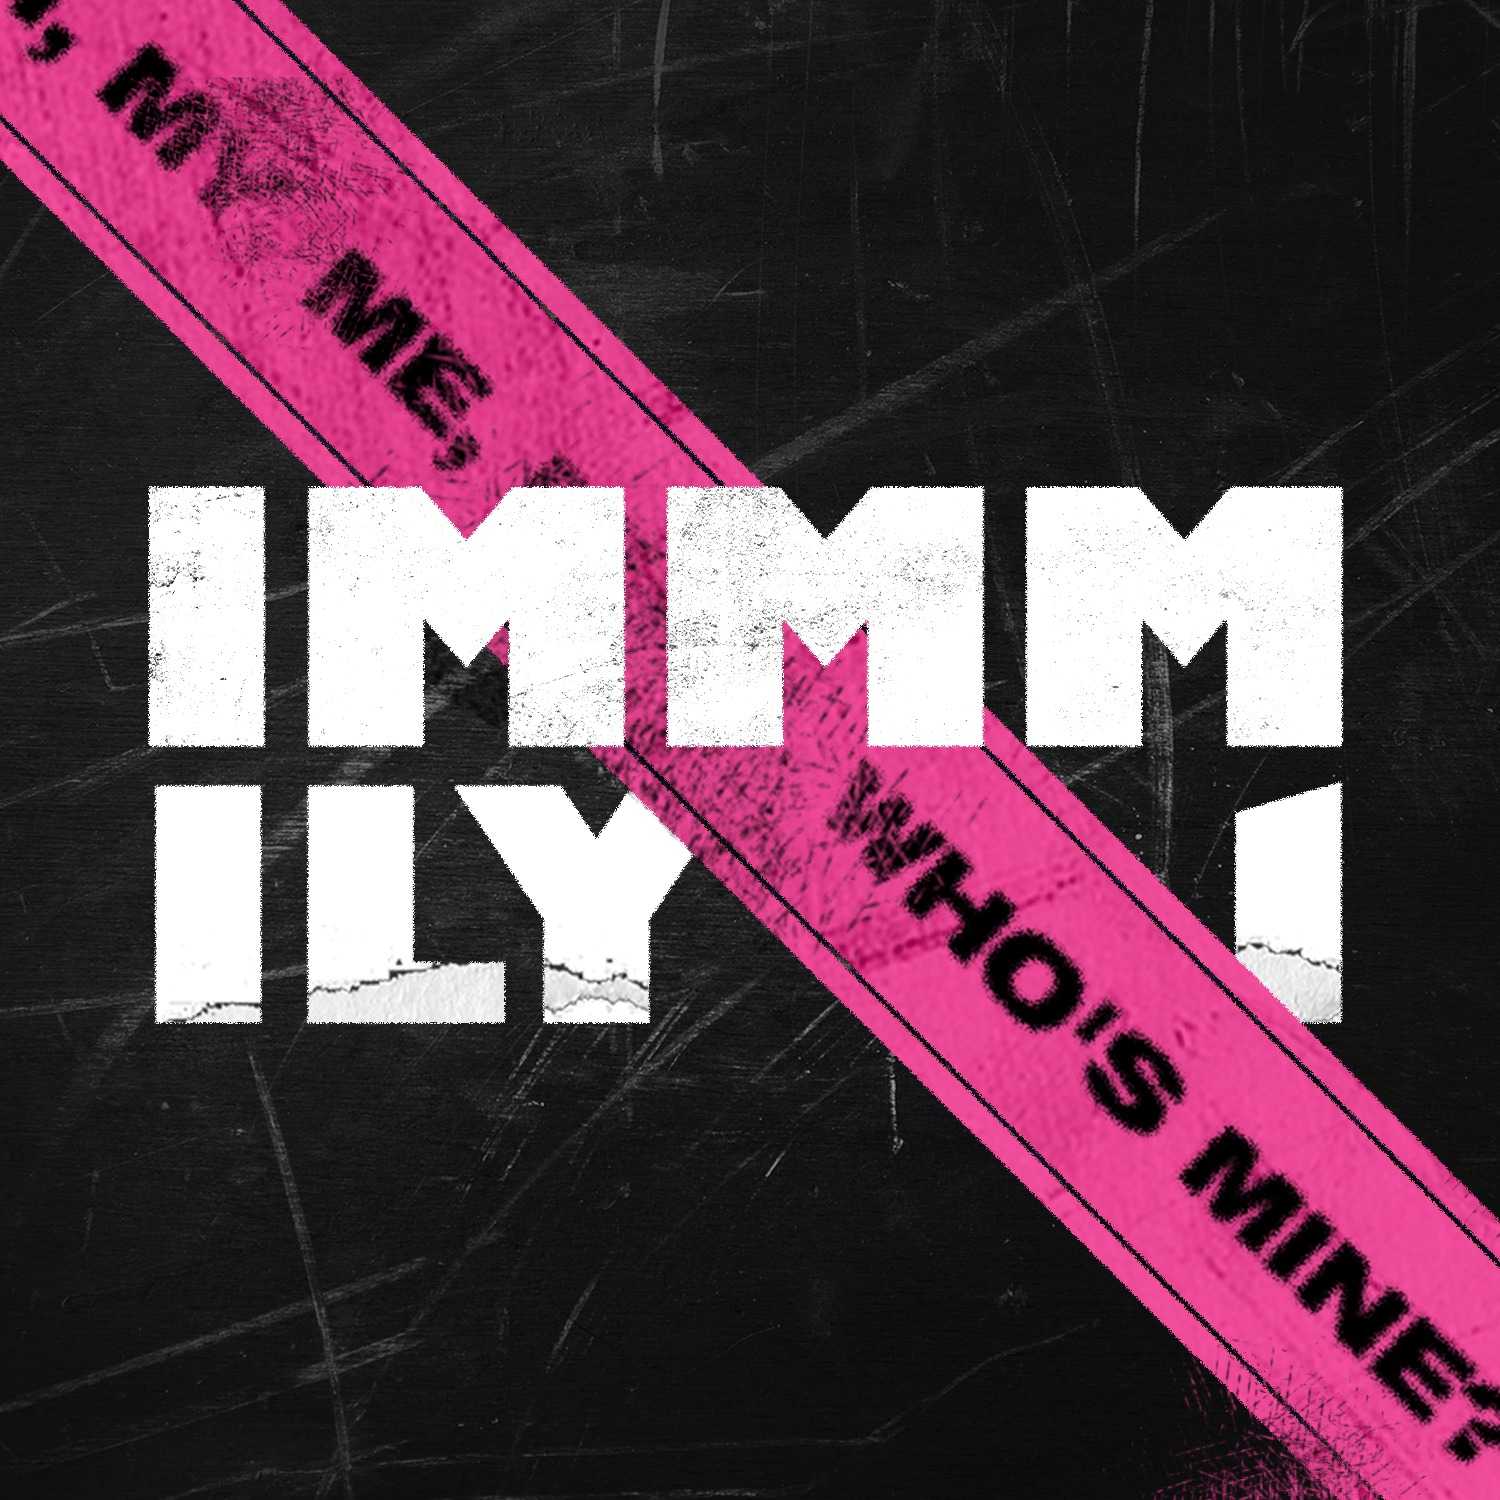 ILY:1 — I MY ME MINE cover artwork